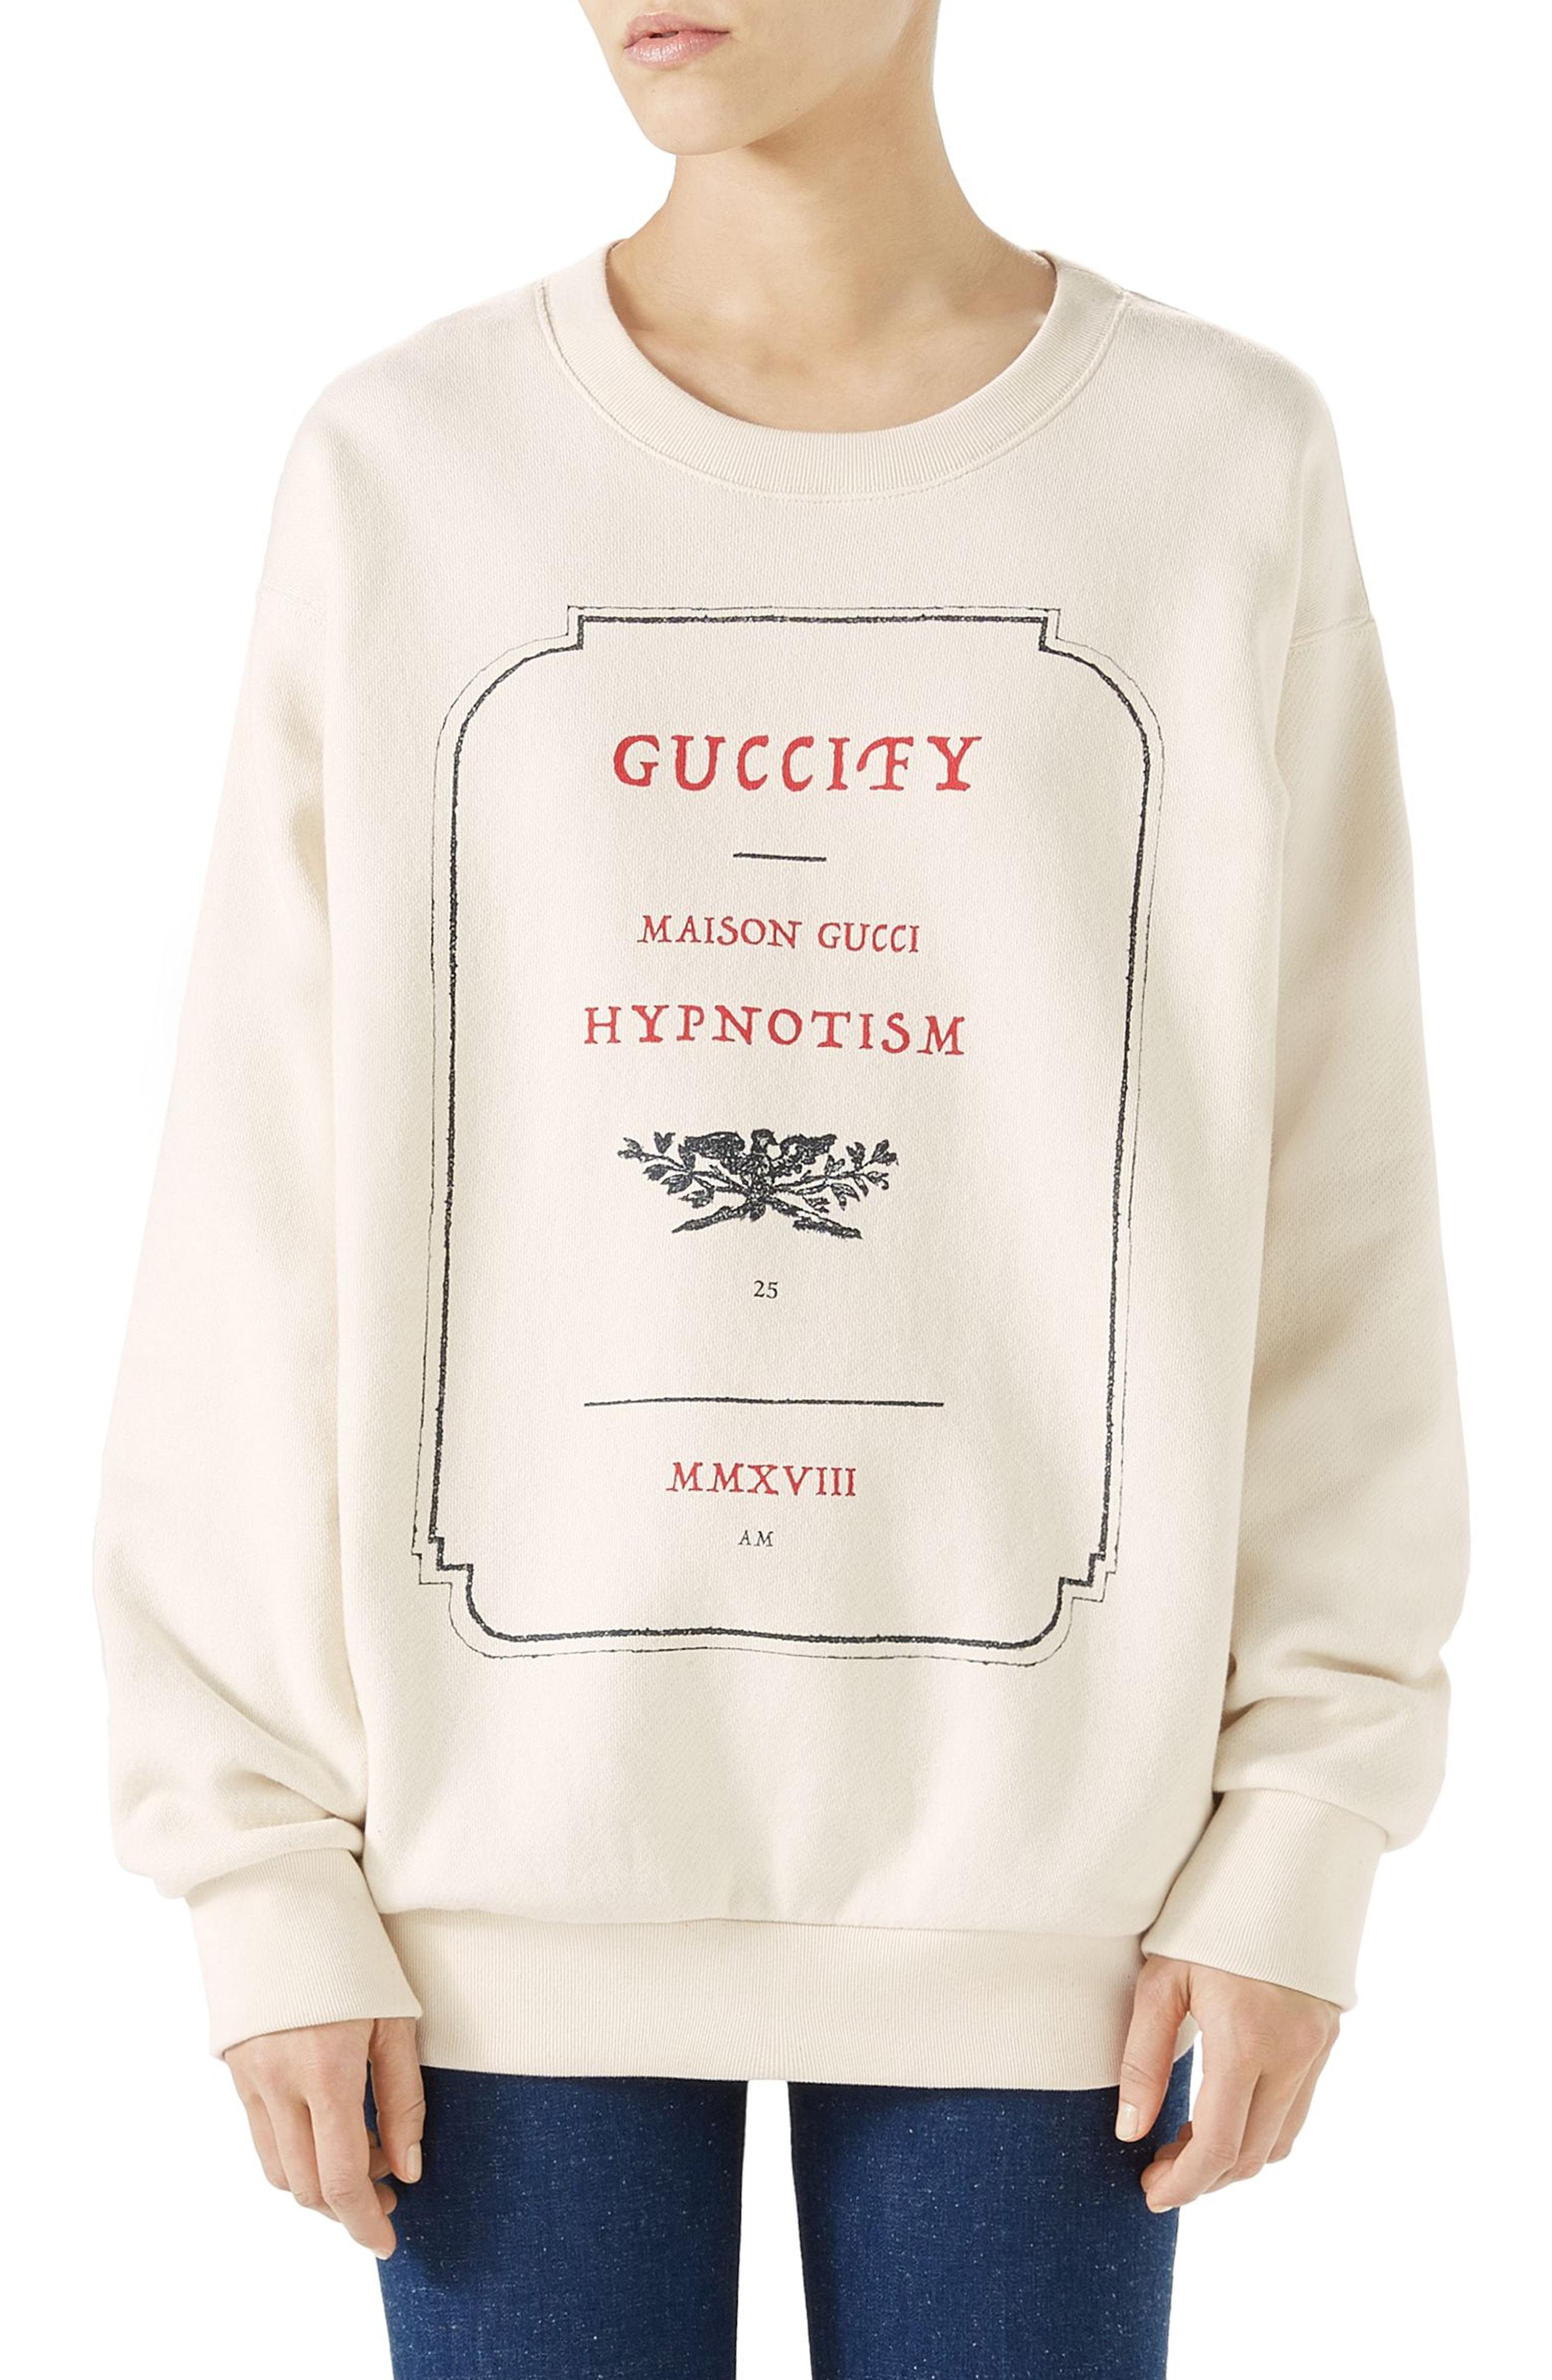 guccify hypnotism hoodie